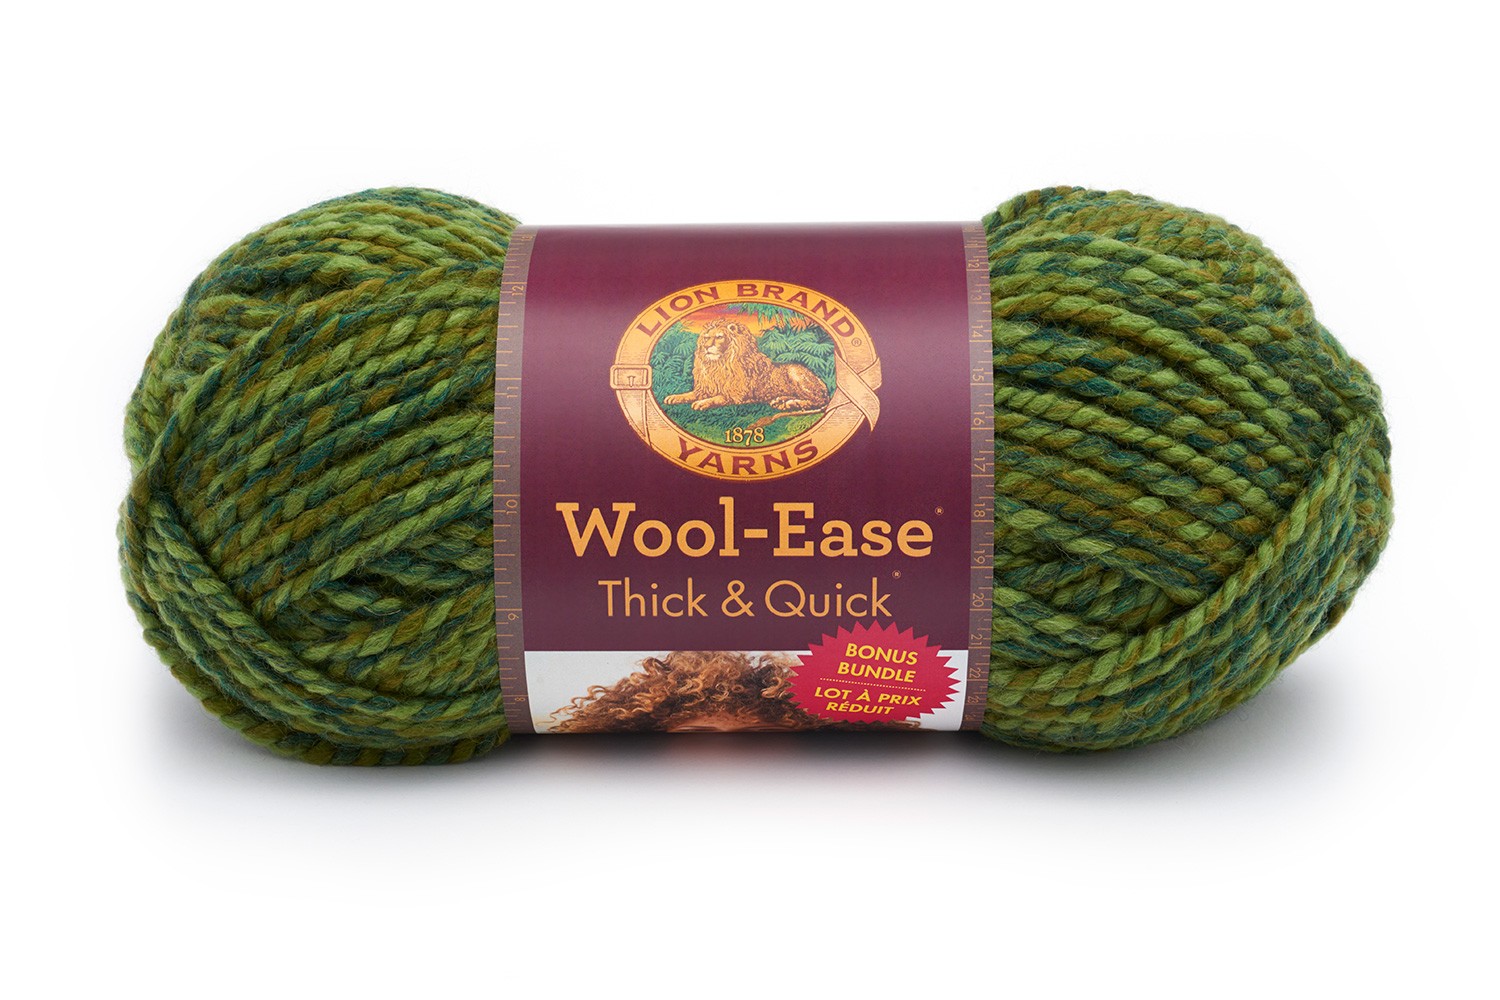 Wool-Ease Thick & Quick Bonus Bundle in Spearmint